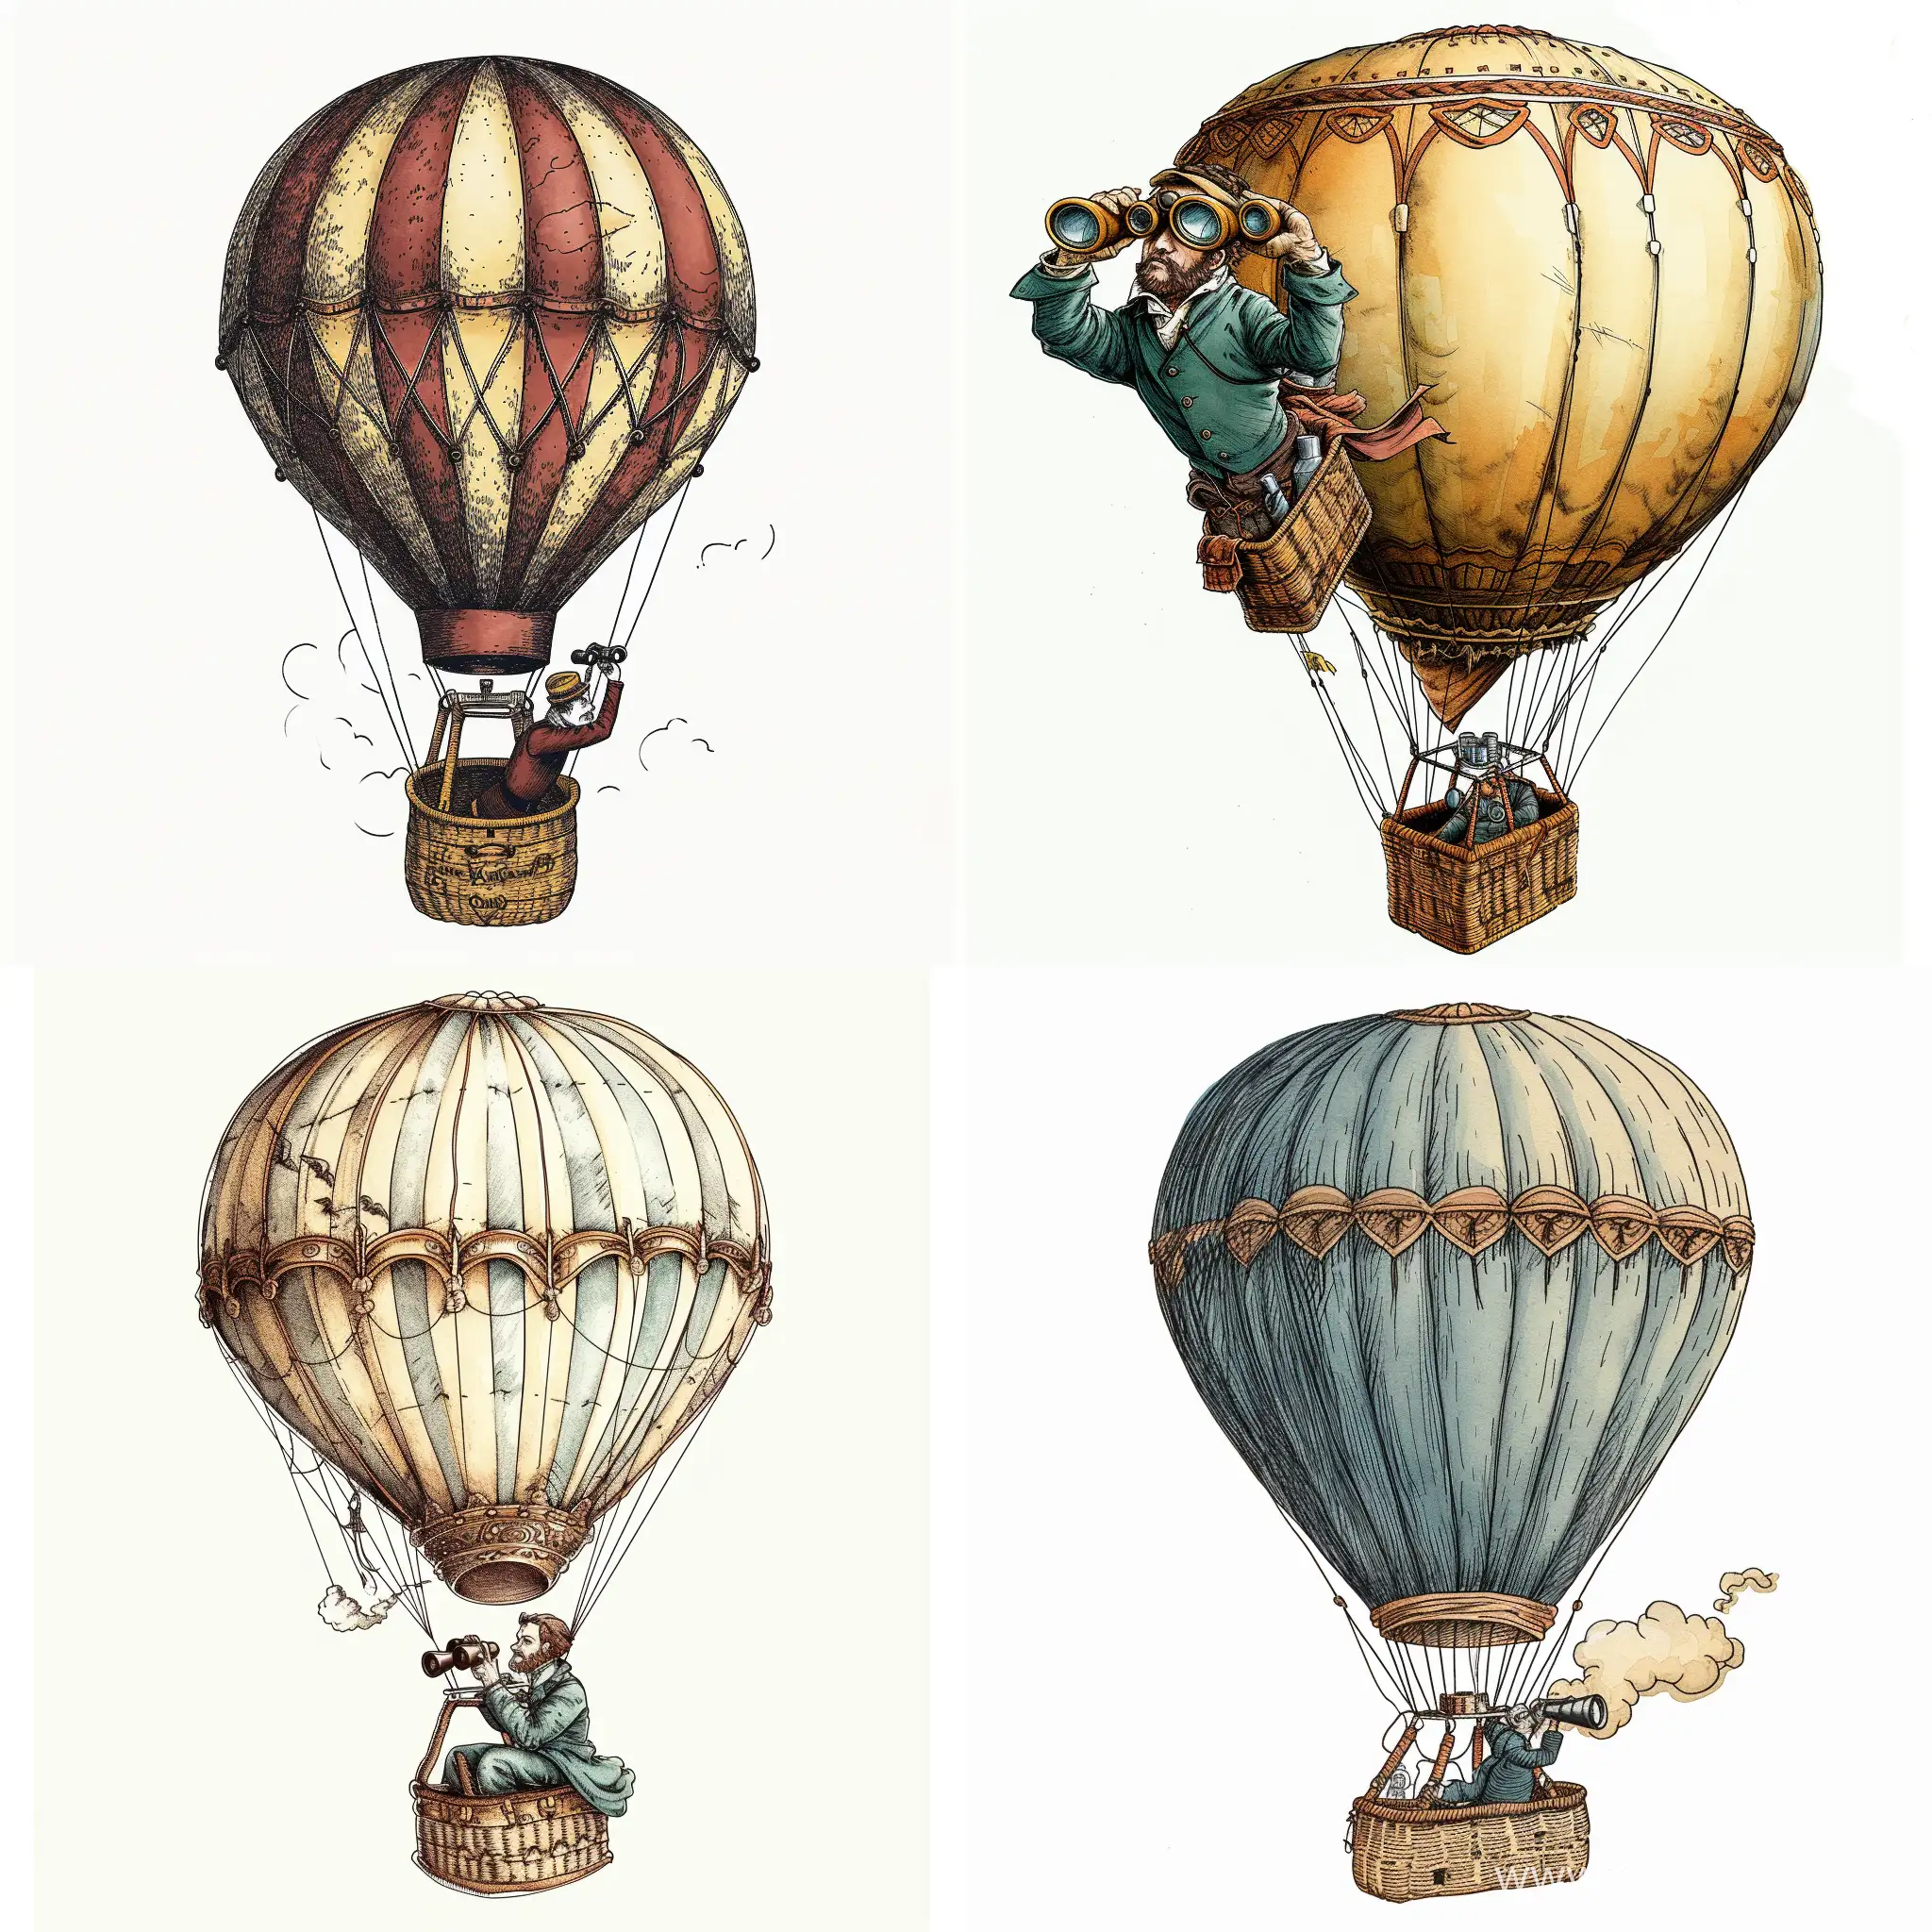 Adventurous-Victor-in-Hot-Air-Balloon-with-Binoculars-Sketch-Drawing-Illustrator-Style